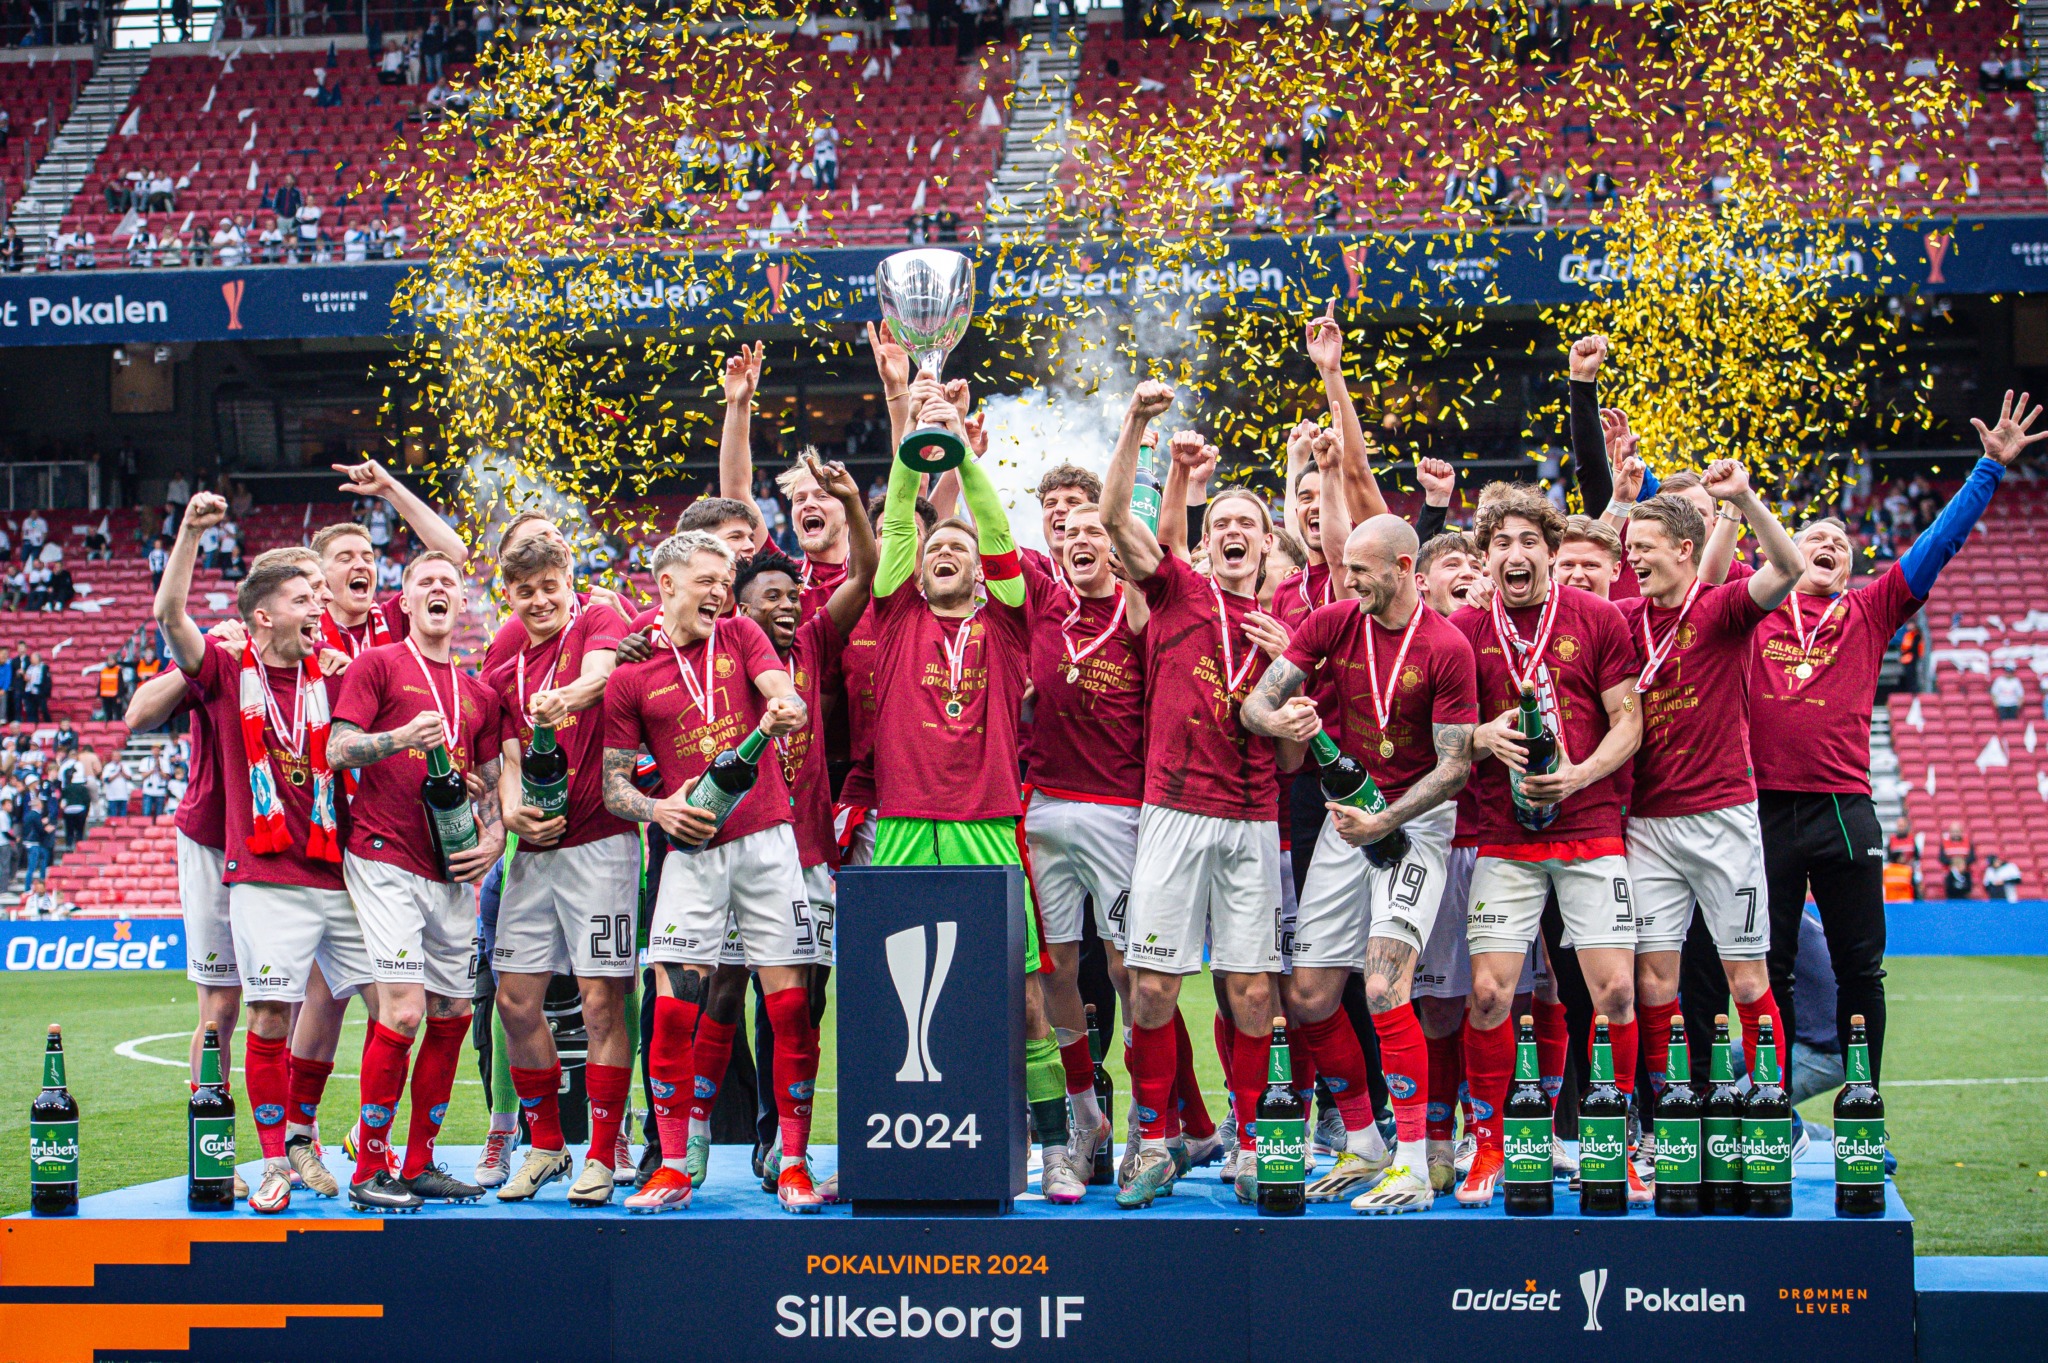 Silkeborg IF Pokalvinder 2024